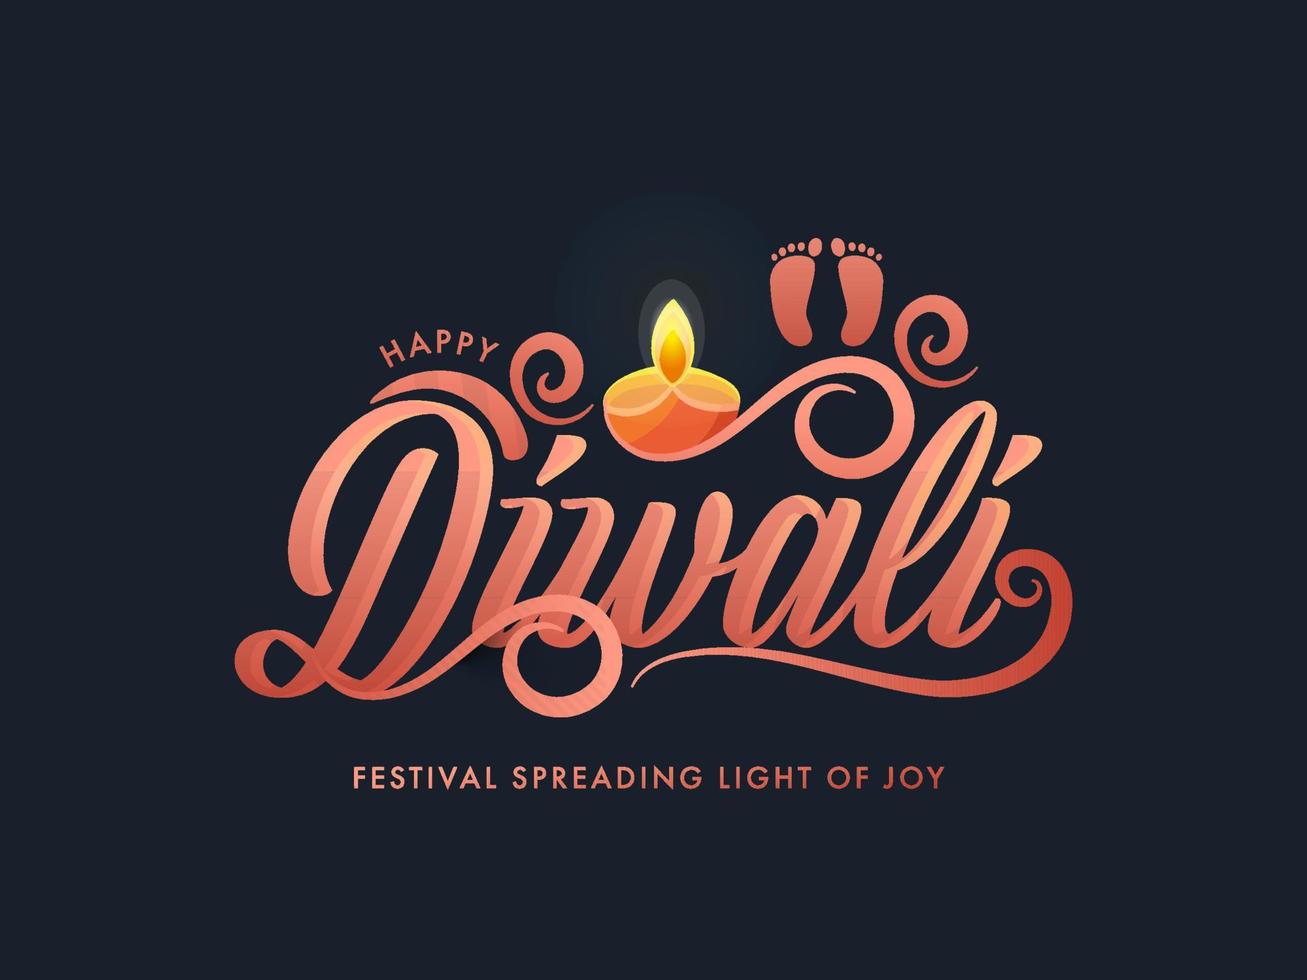 contento diwali festival extensión ligero de alegría texto con diosa huella y iluminado petróleo lámpara en oscuro verde azulado azul antecedentes. vector